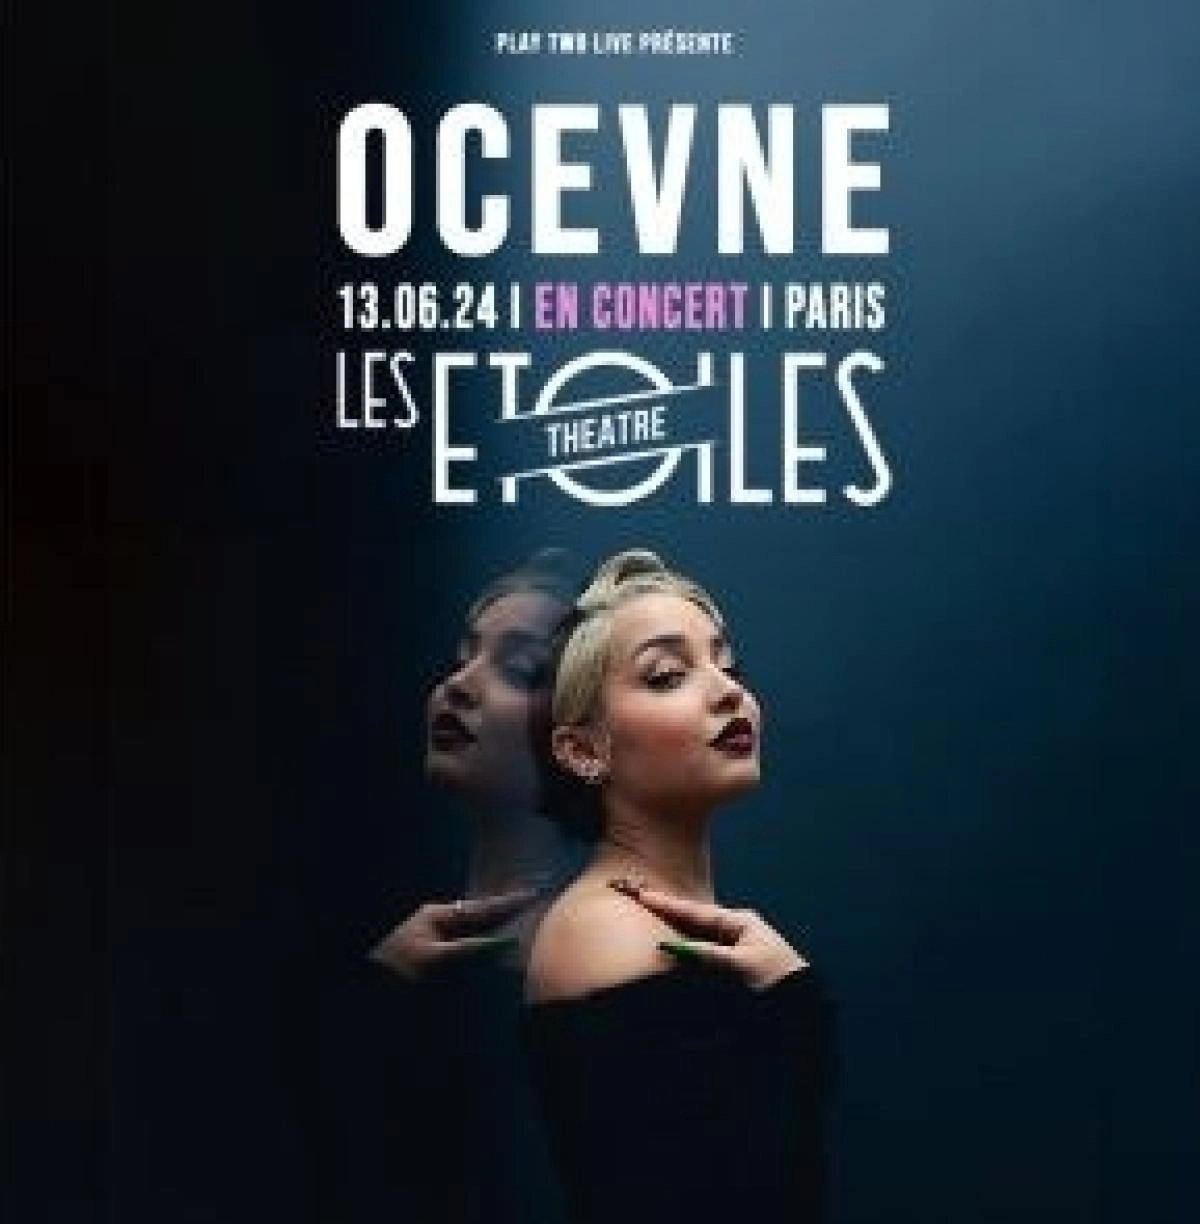 Ocevne at Les Etoiles Tickets